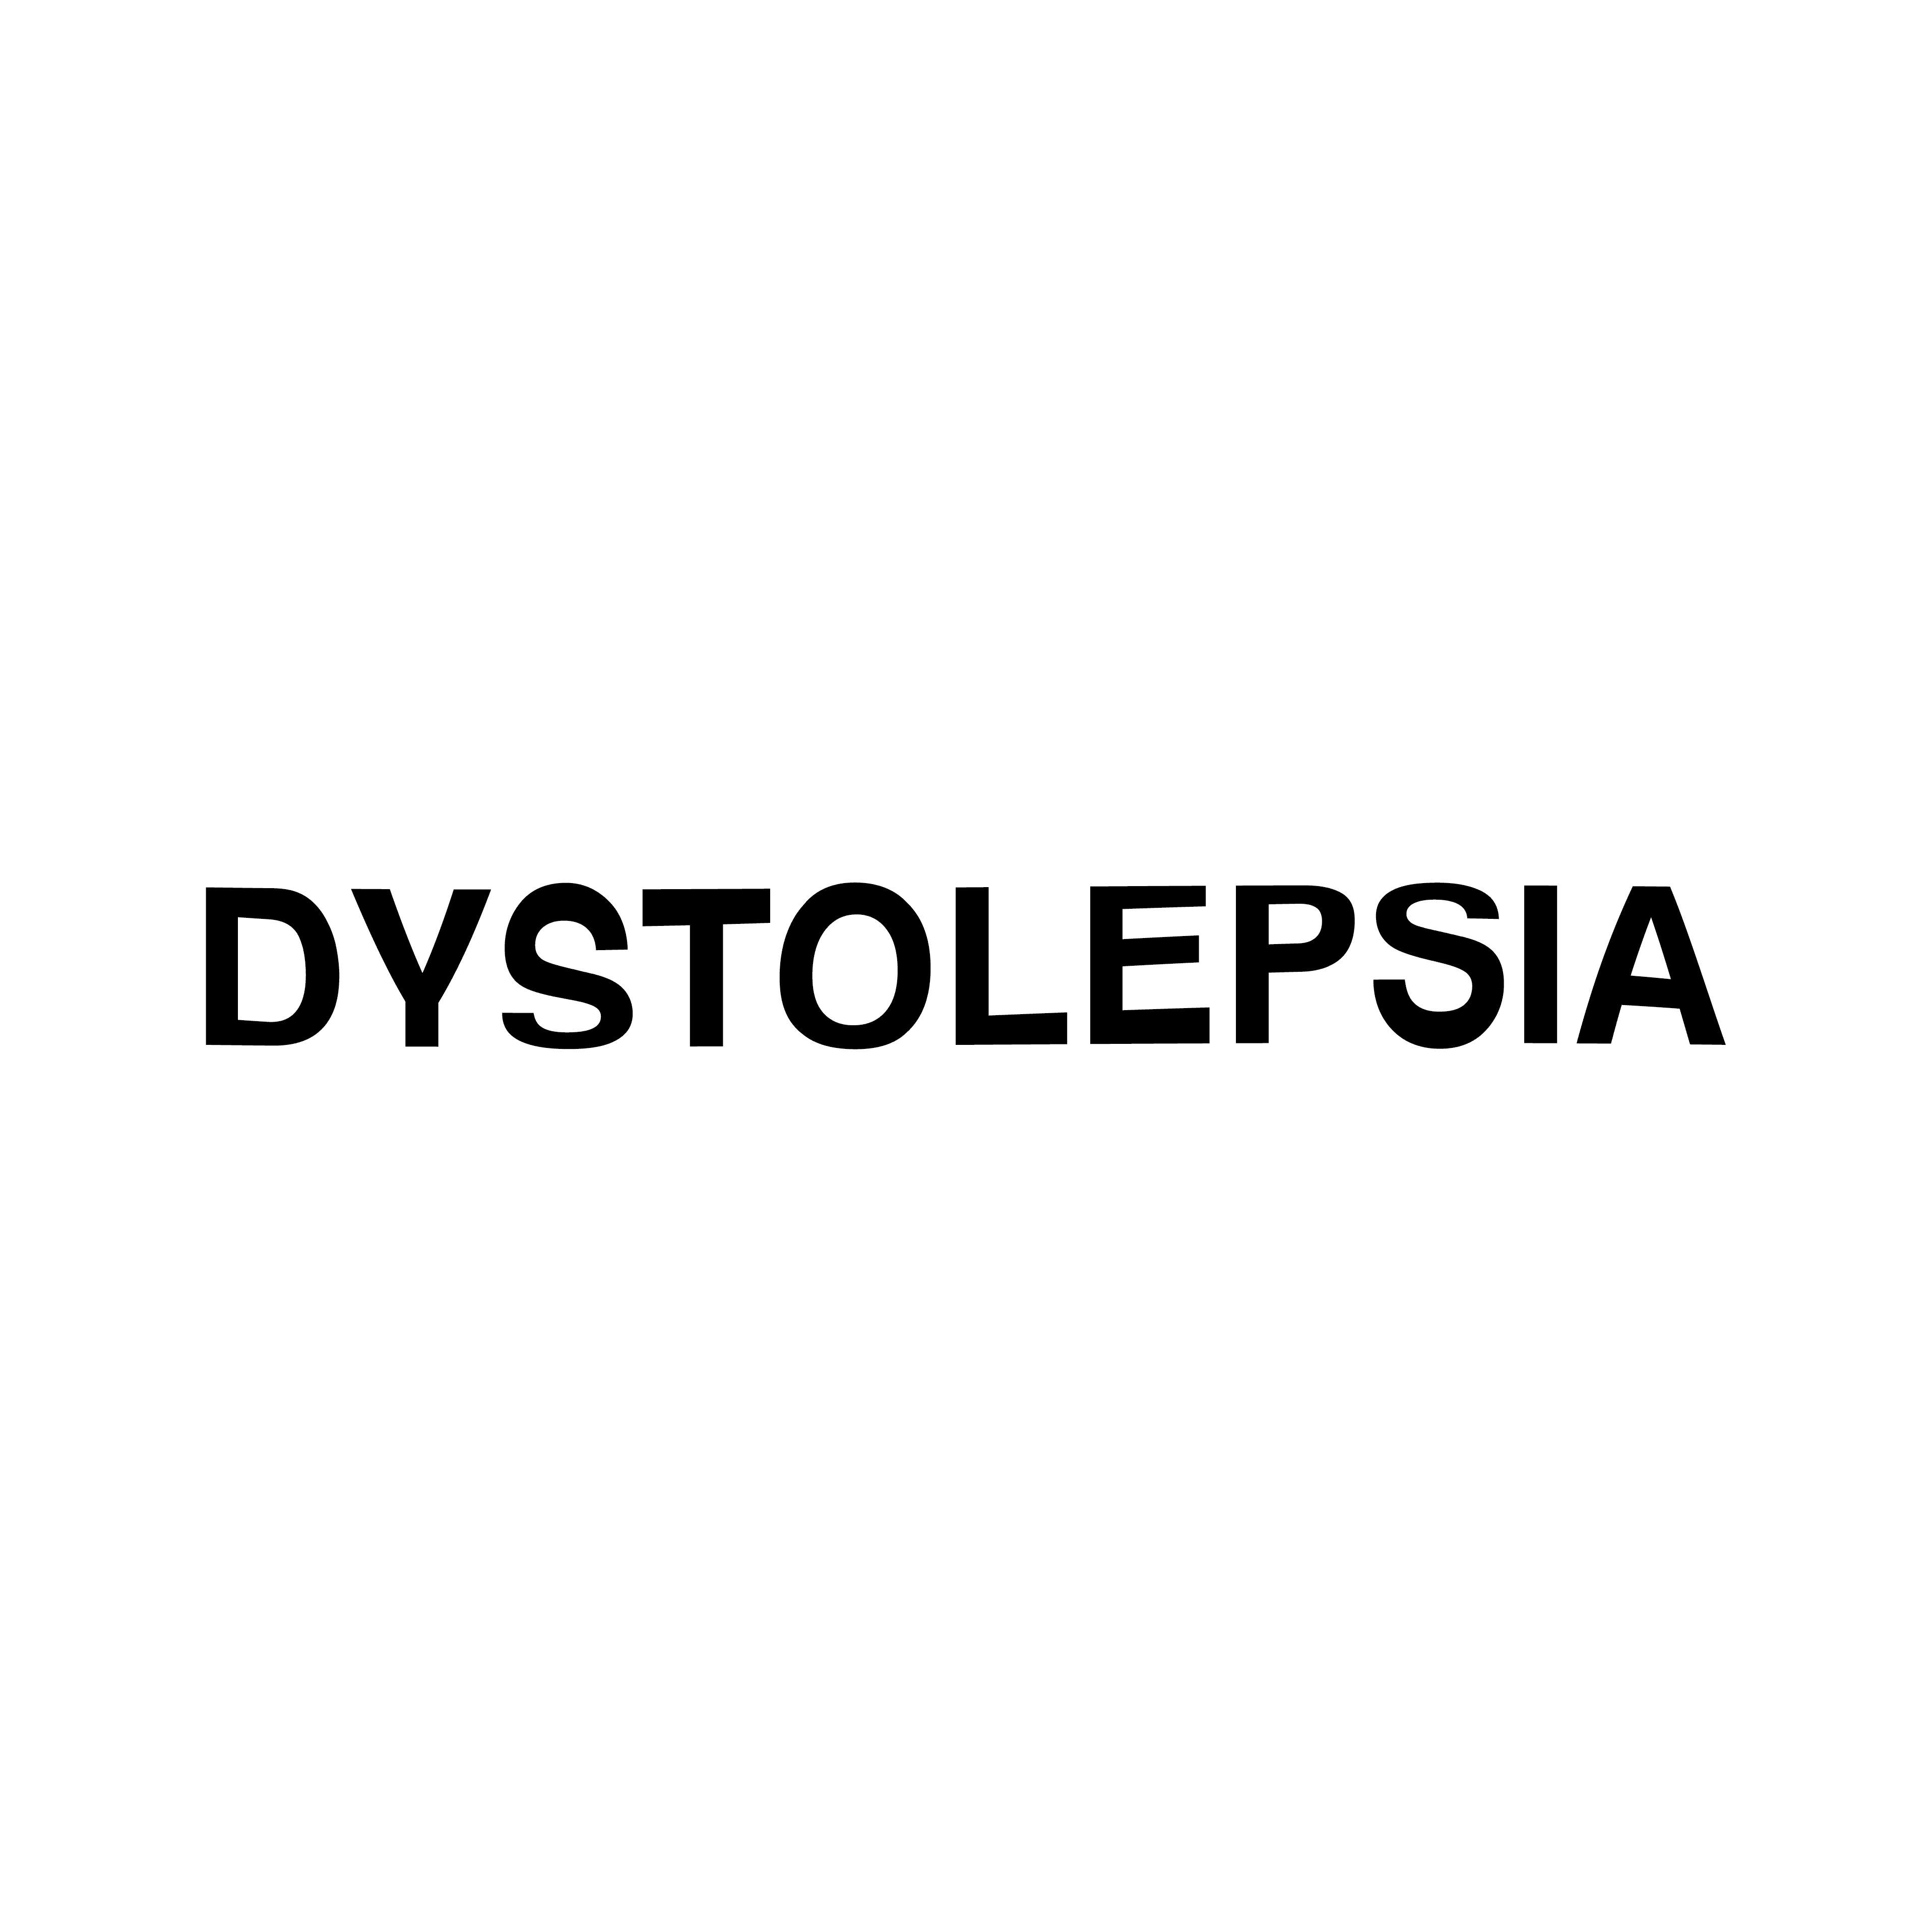 Dystolepsia - Radical Vision